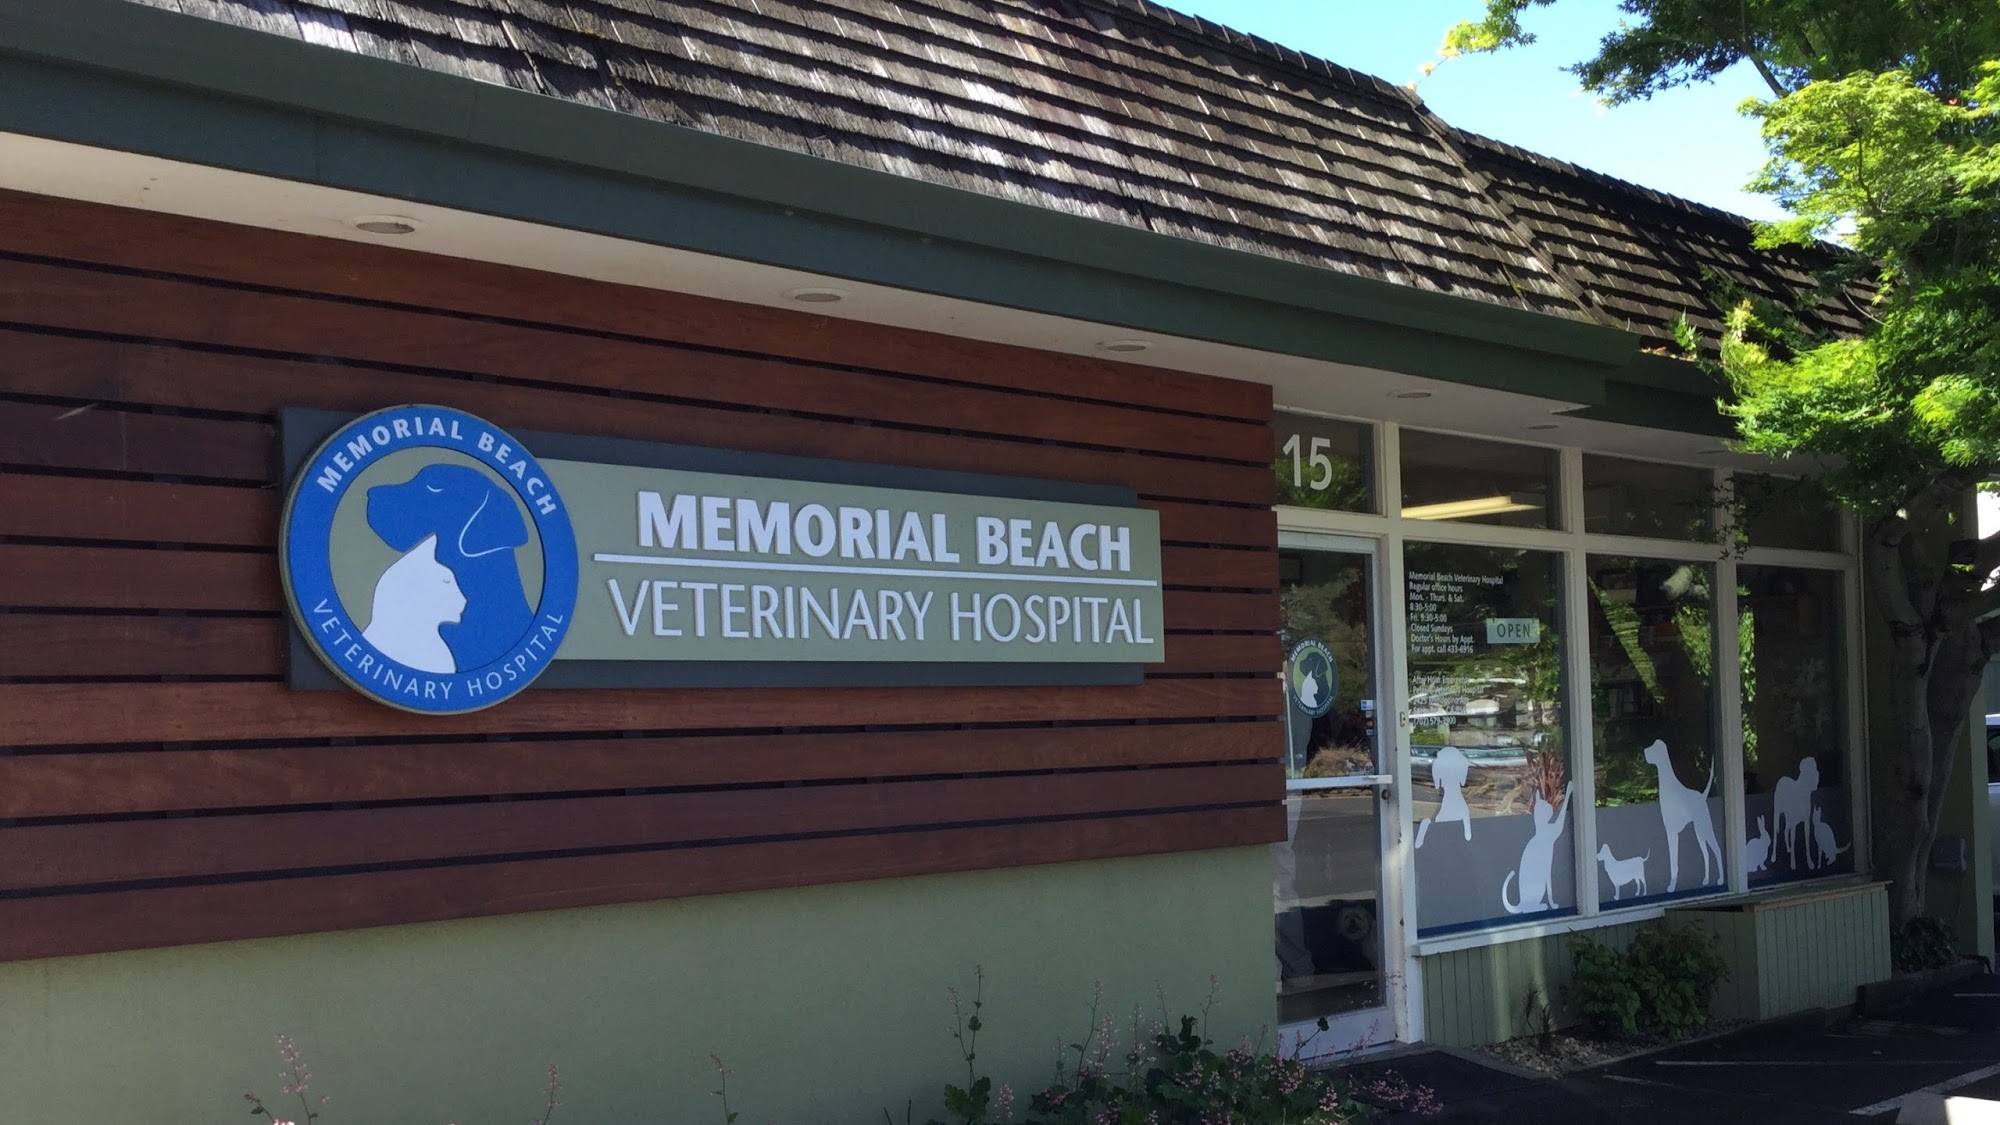 Memorial Beach Veterinary Hospital